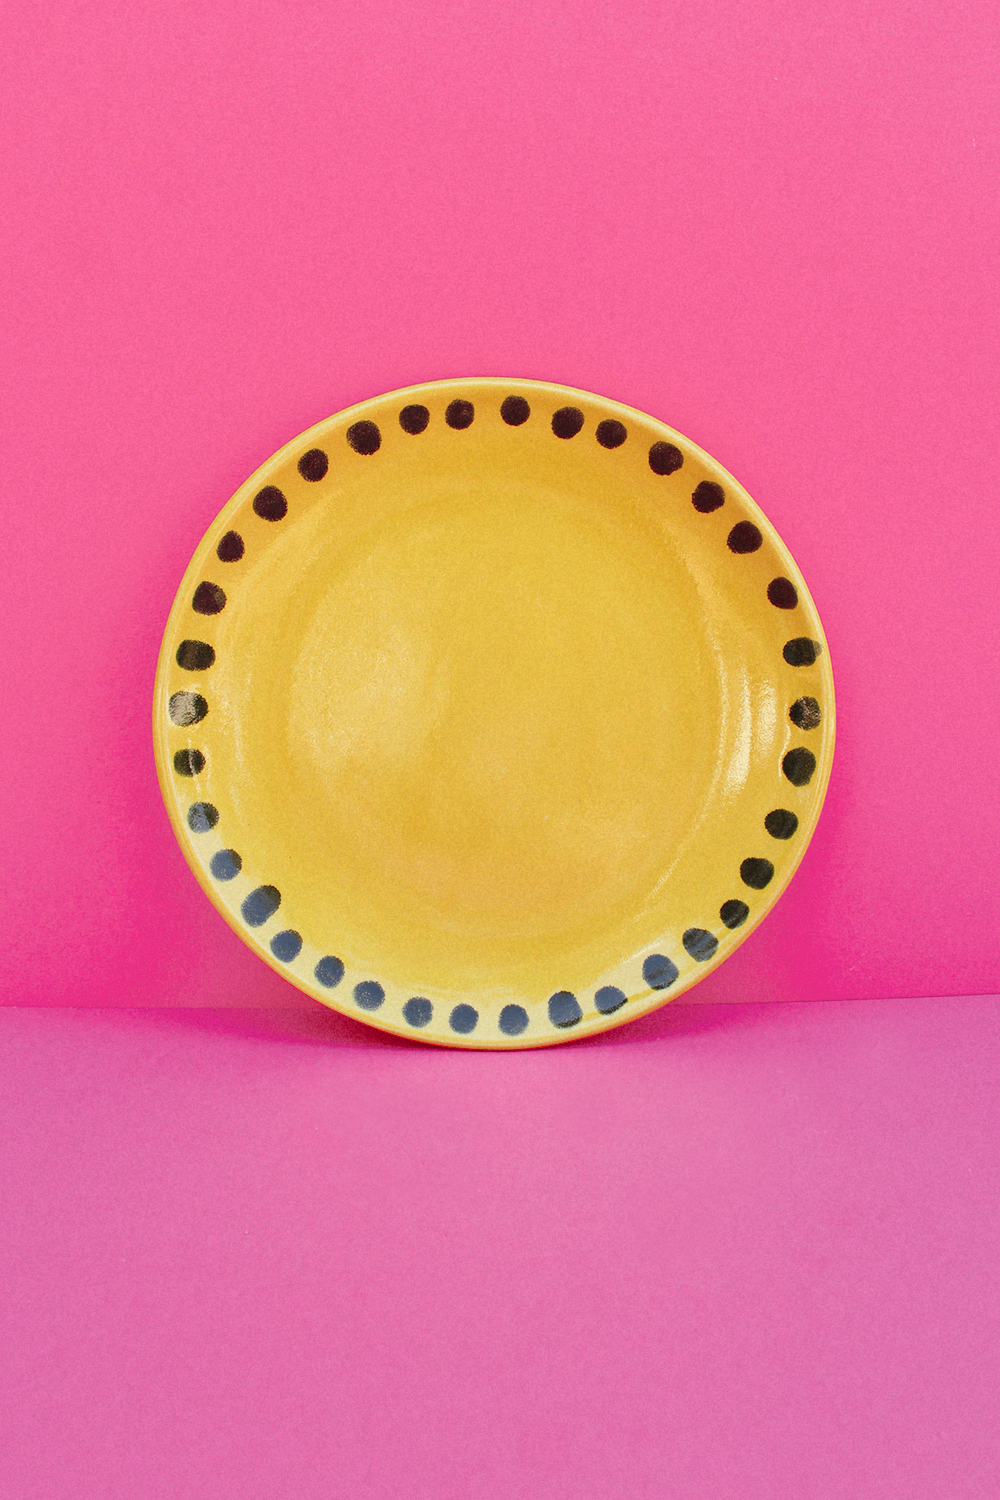 rain-yellow-plate-1.png